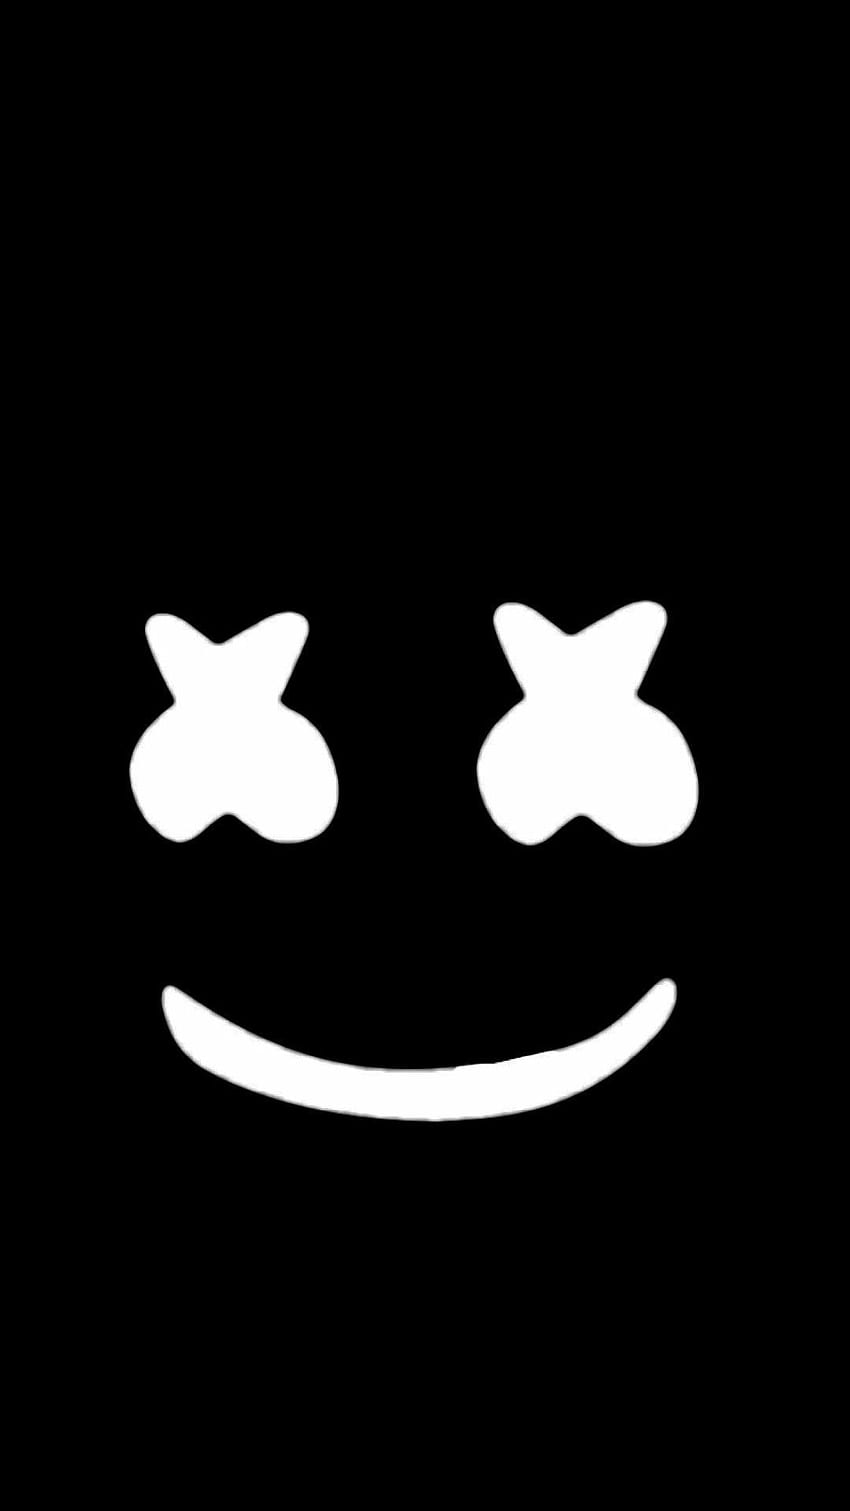 Happy Flat Sad Emoji Wallpaper Illustration Stock Illustration 1817083334   Shutterstock